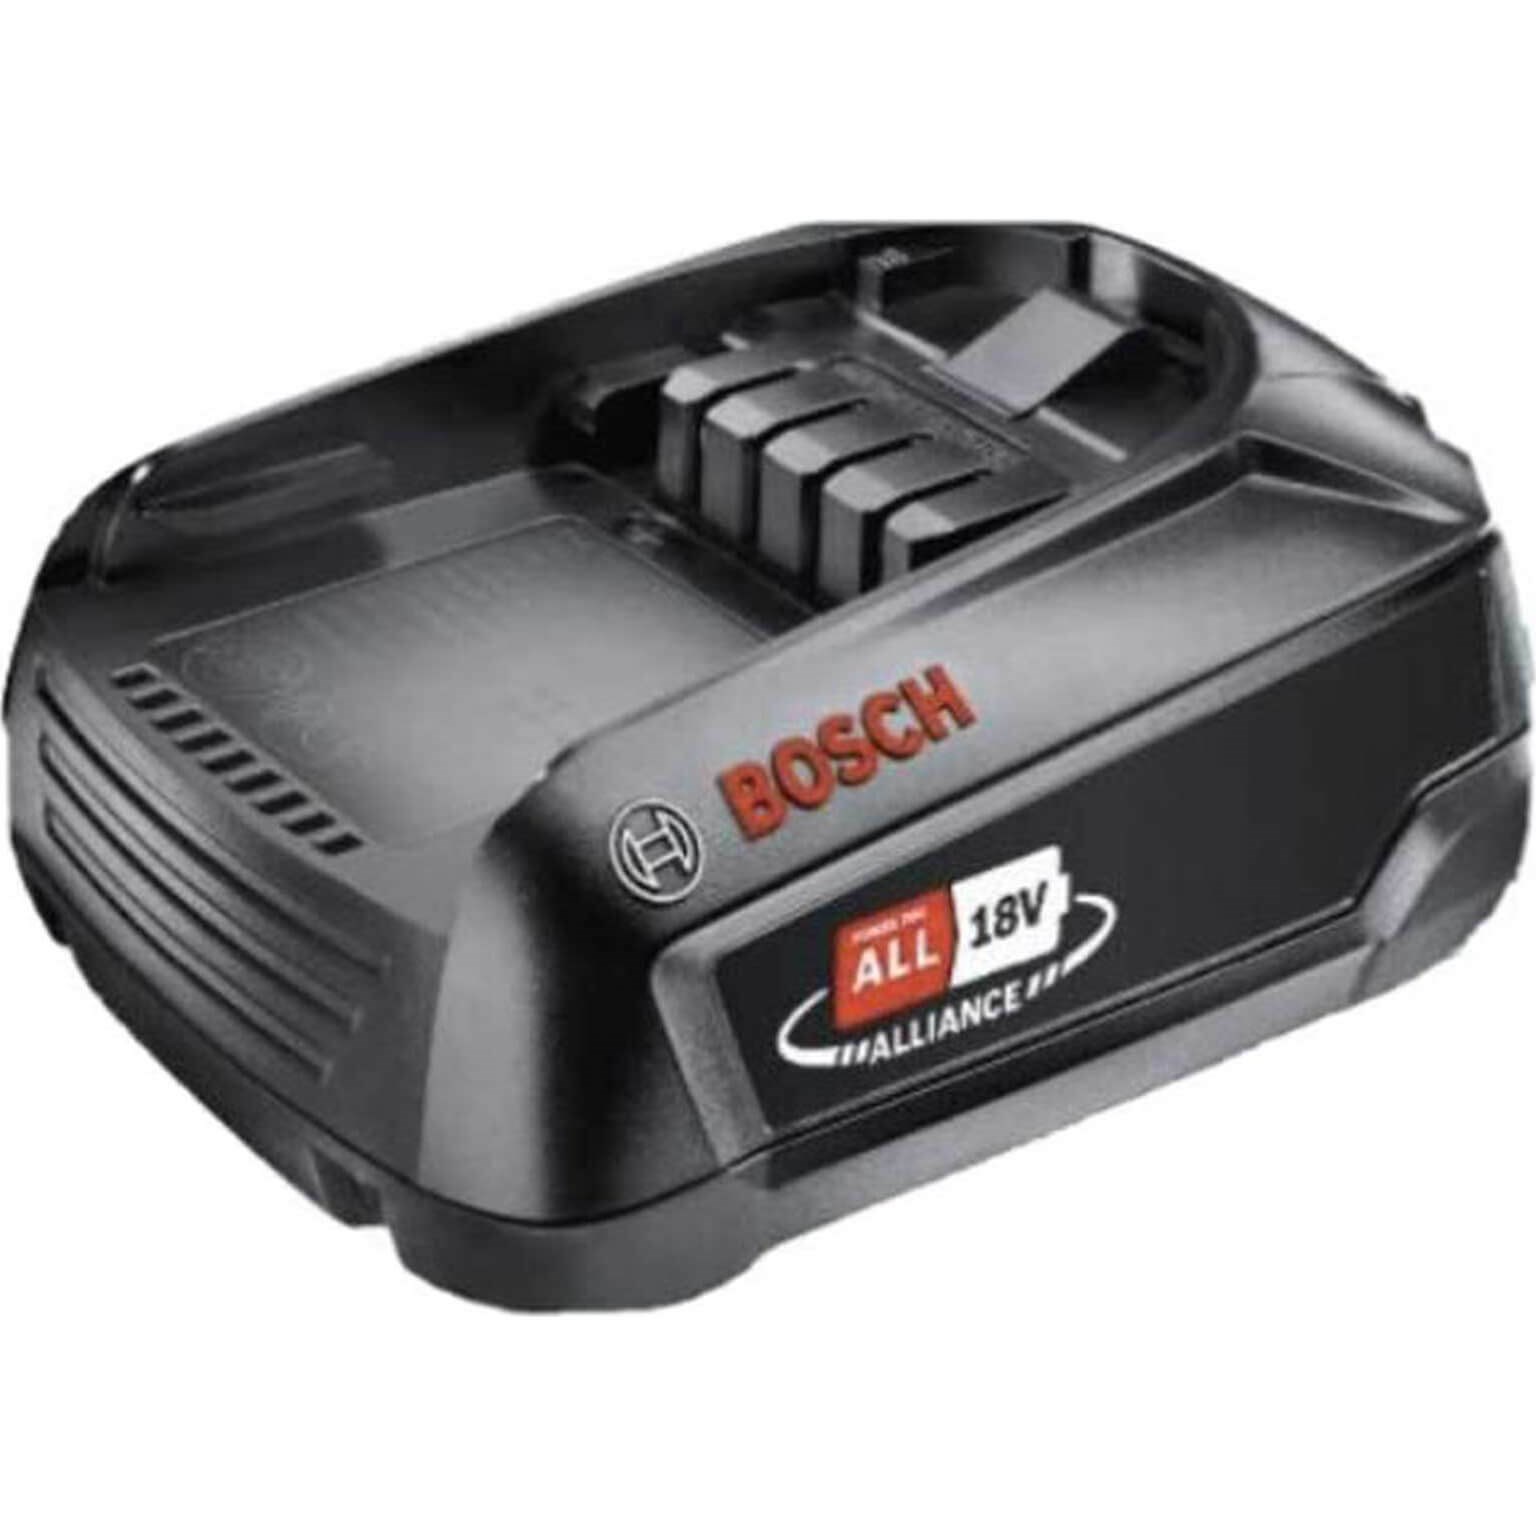 Bosch GREEN 18v Cordless Li-ion Battery 1.5ah | Battery